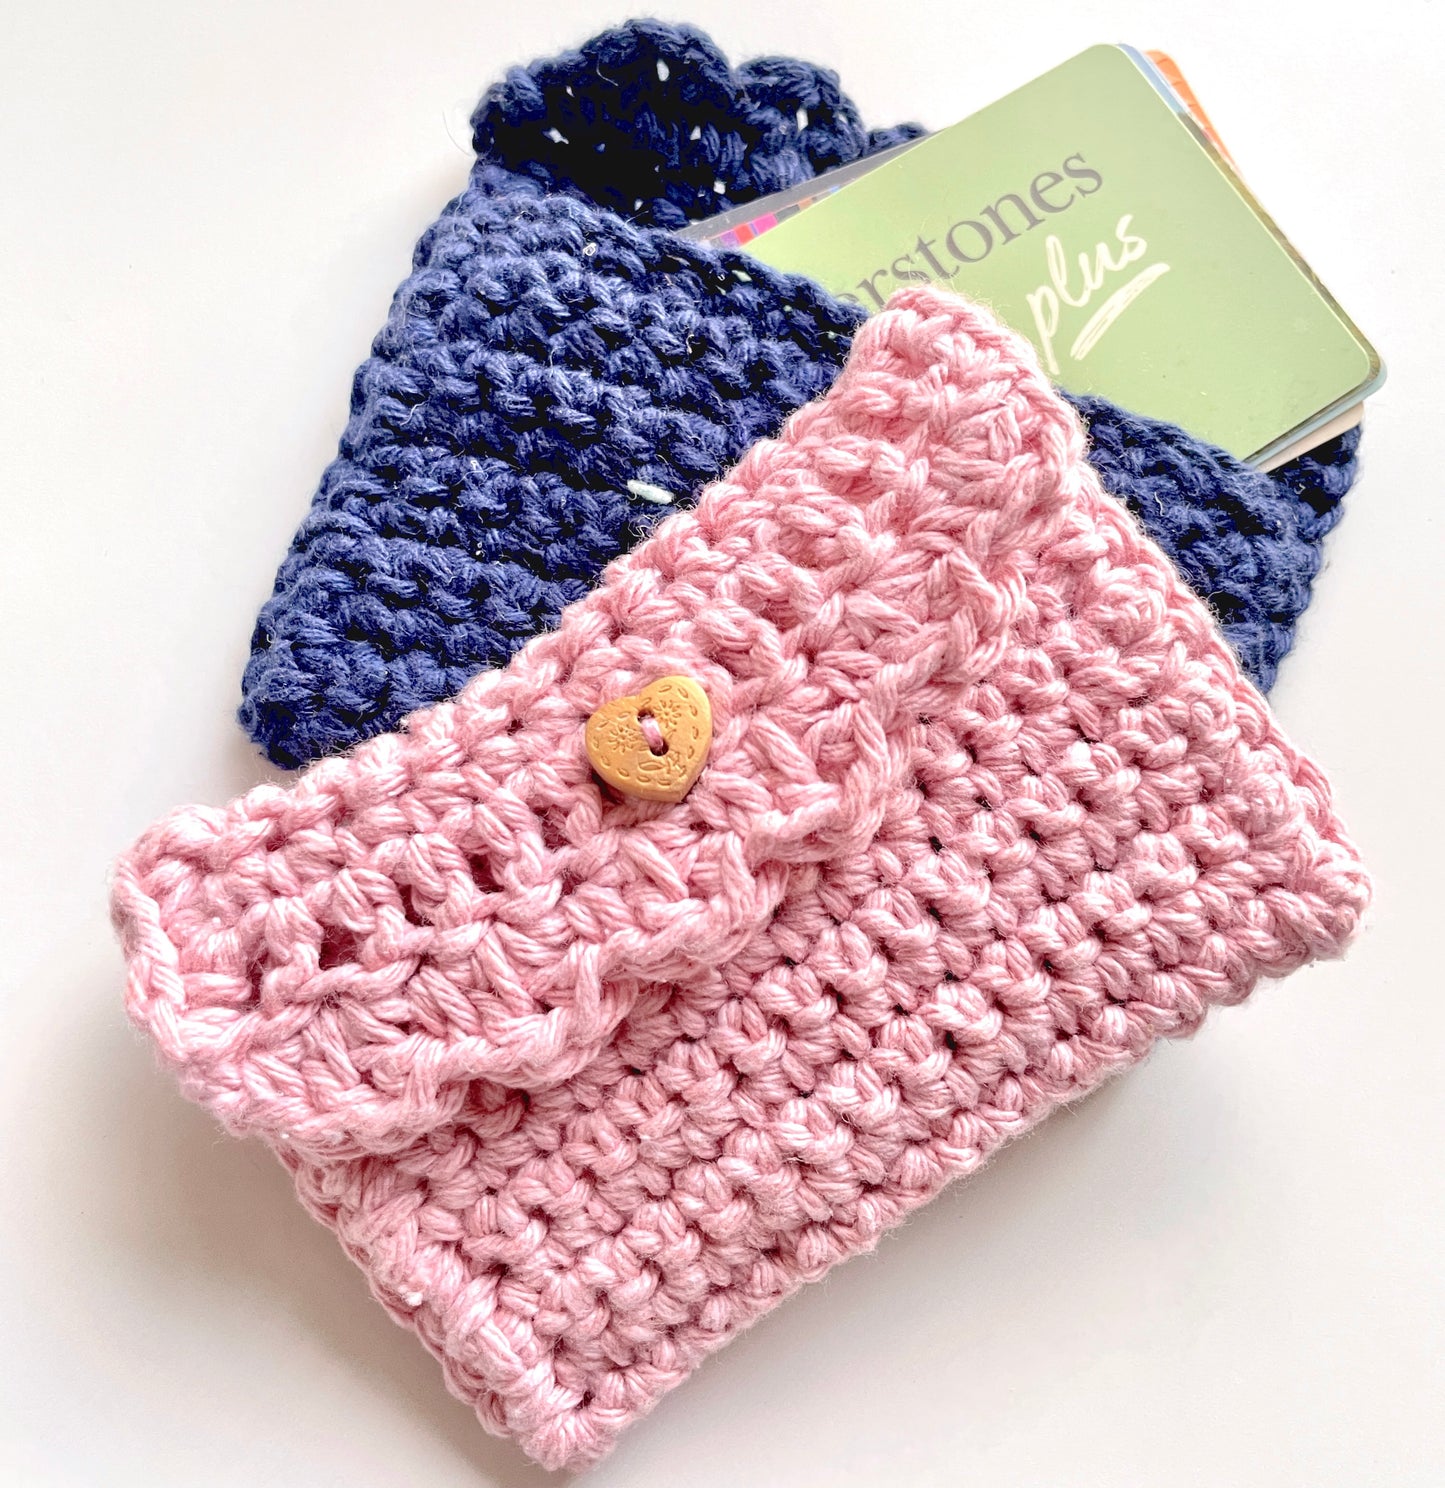 Ticket or Loyalty Card Holder Crochet Kit